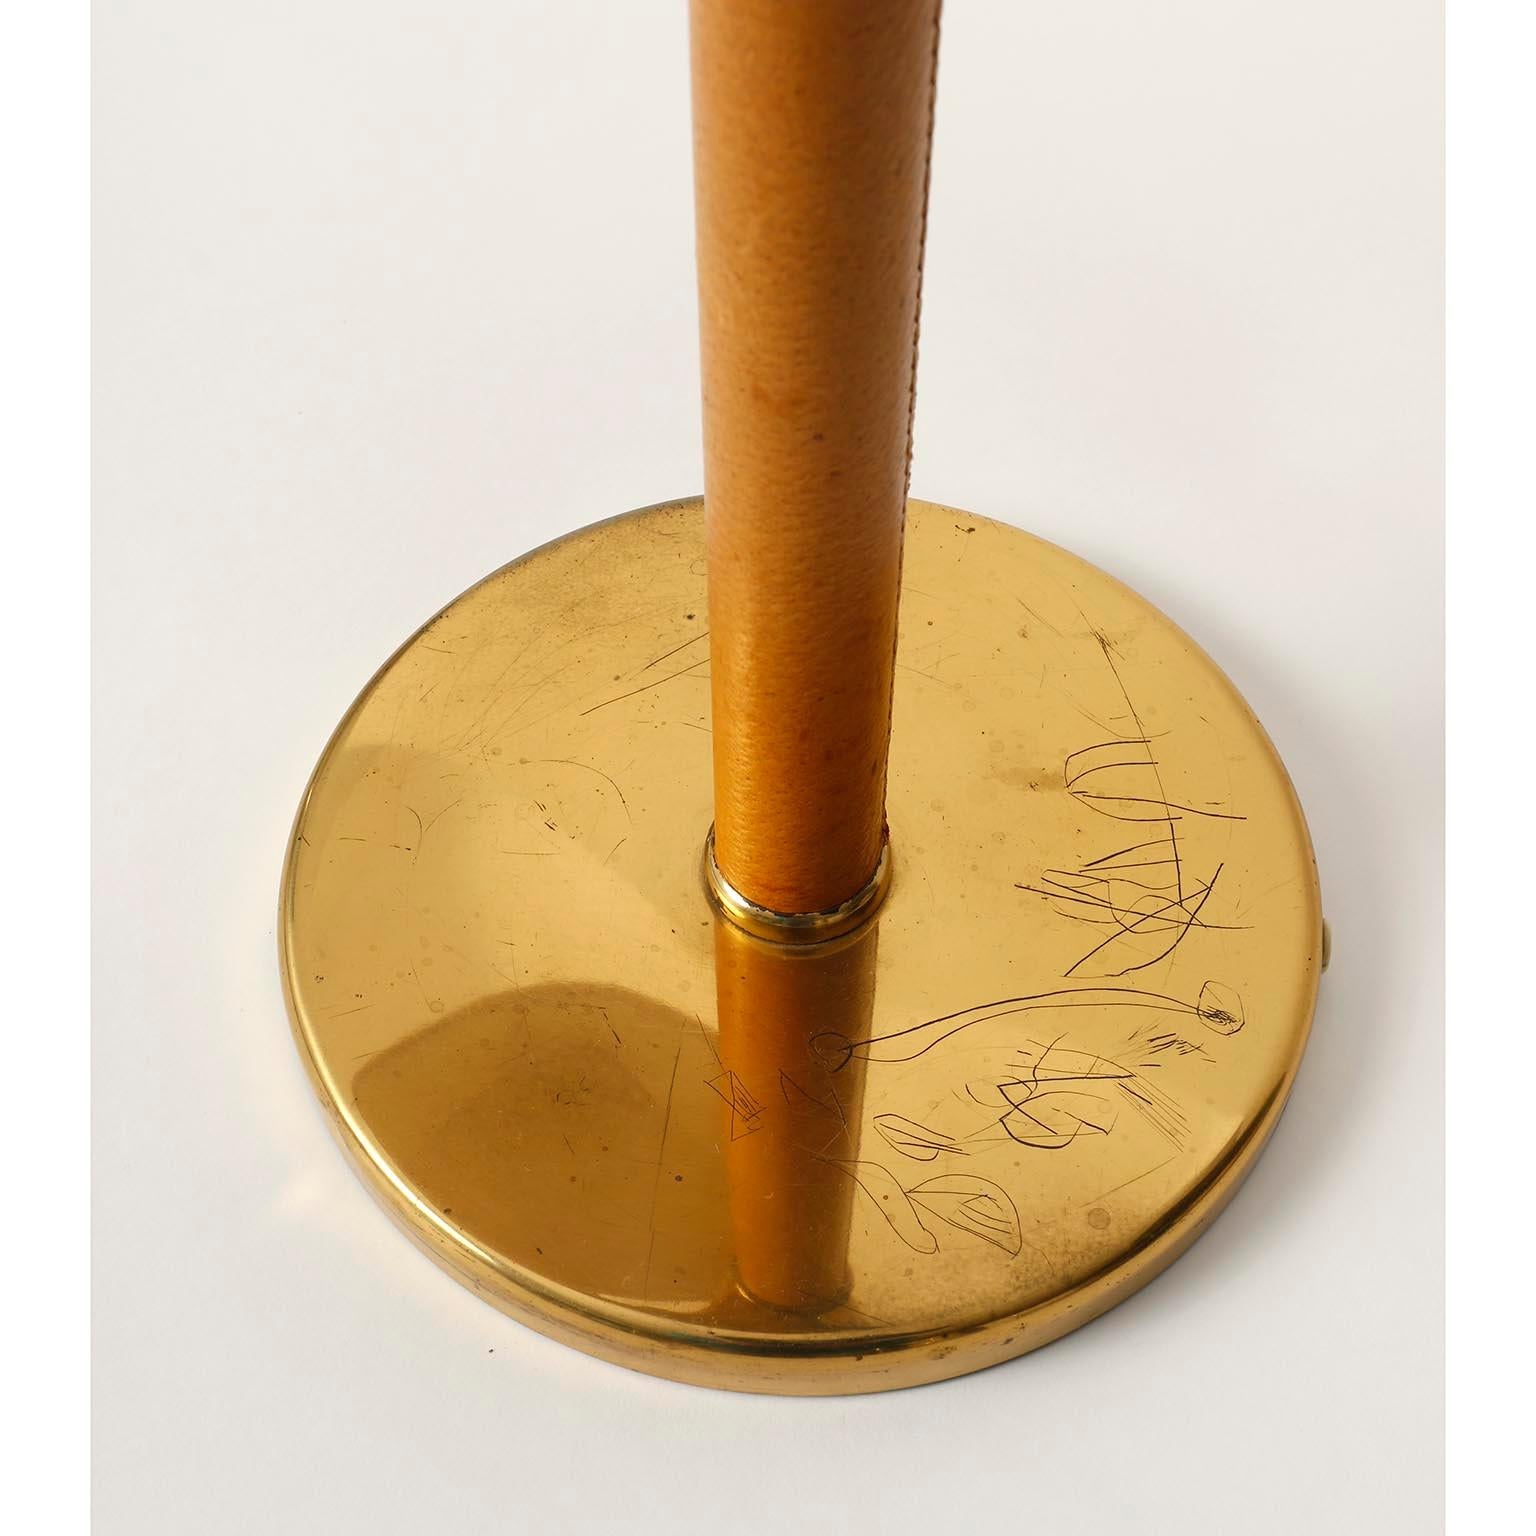 Josef Frank Table Lamp 'Tisch-Überall' Mod. 1092 by Kalmar, Brass Leather, 1950s In Good Condition For Sale In Hausmannstätten, AT